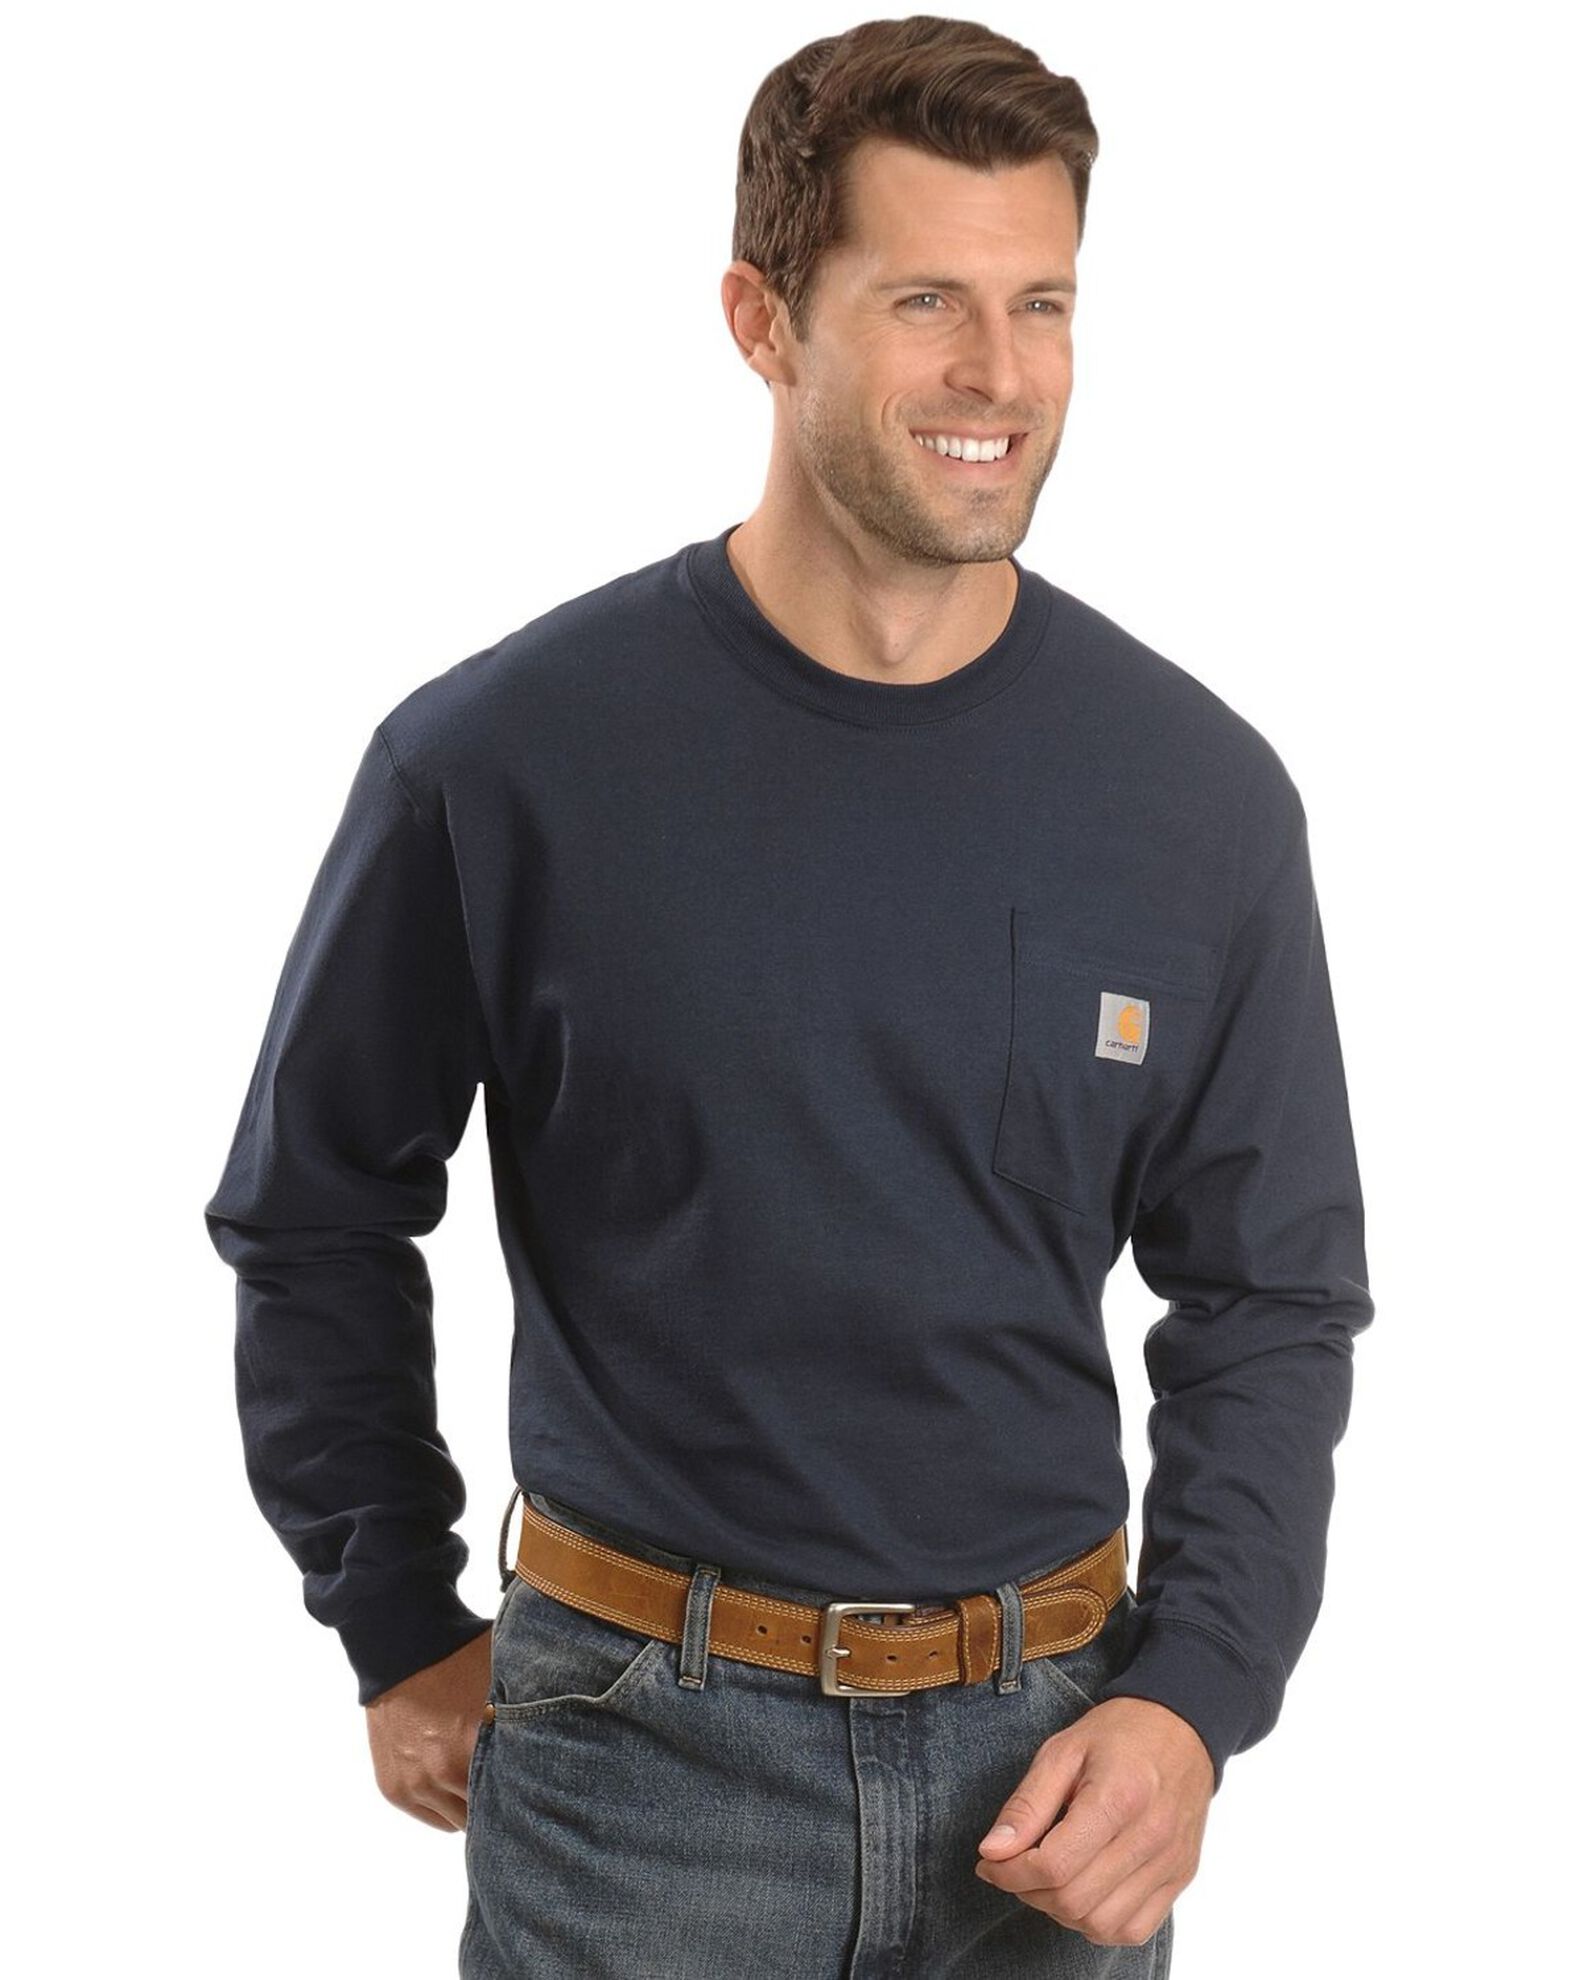 Carhartt Fit Heavyweight Long Sleeve Pocket Work T-Shirt Country Outfitter